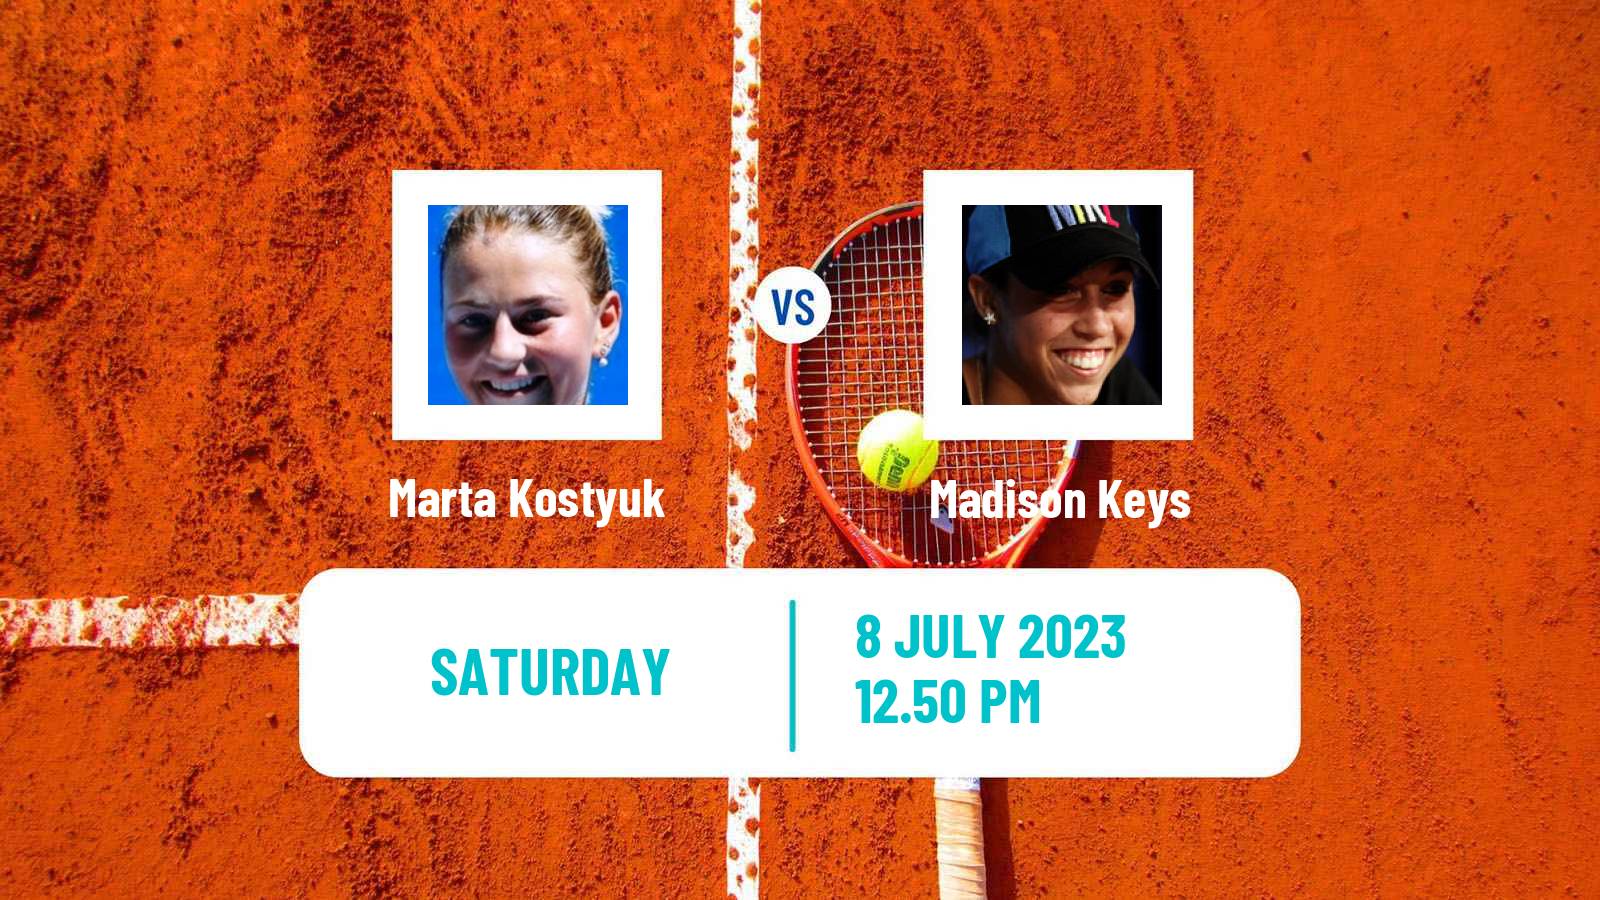 Tennis WTA Wimbledon Marta Kostyuk - Madison Keys